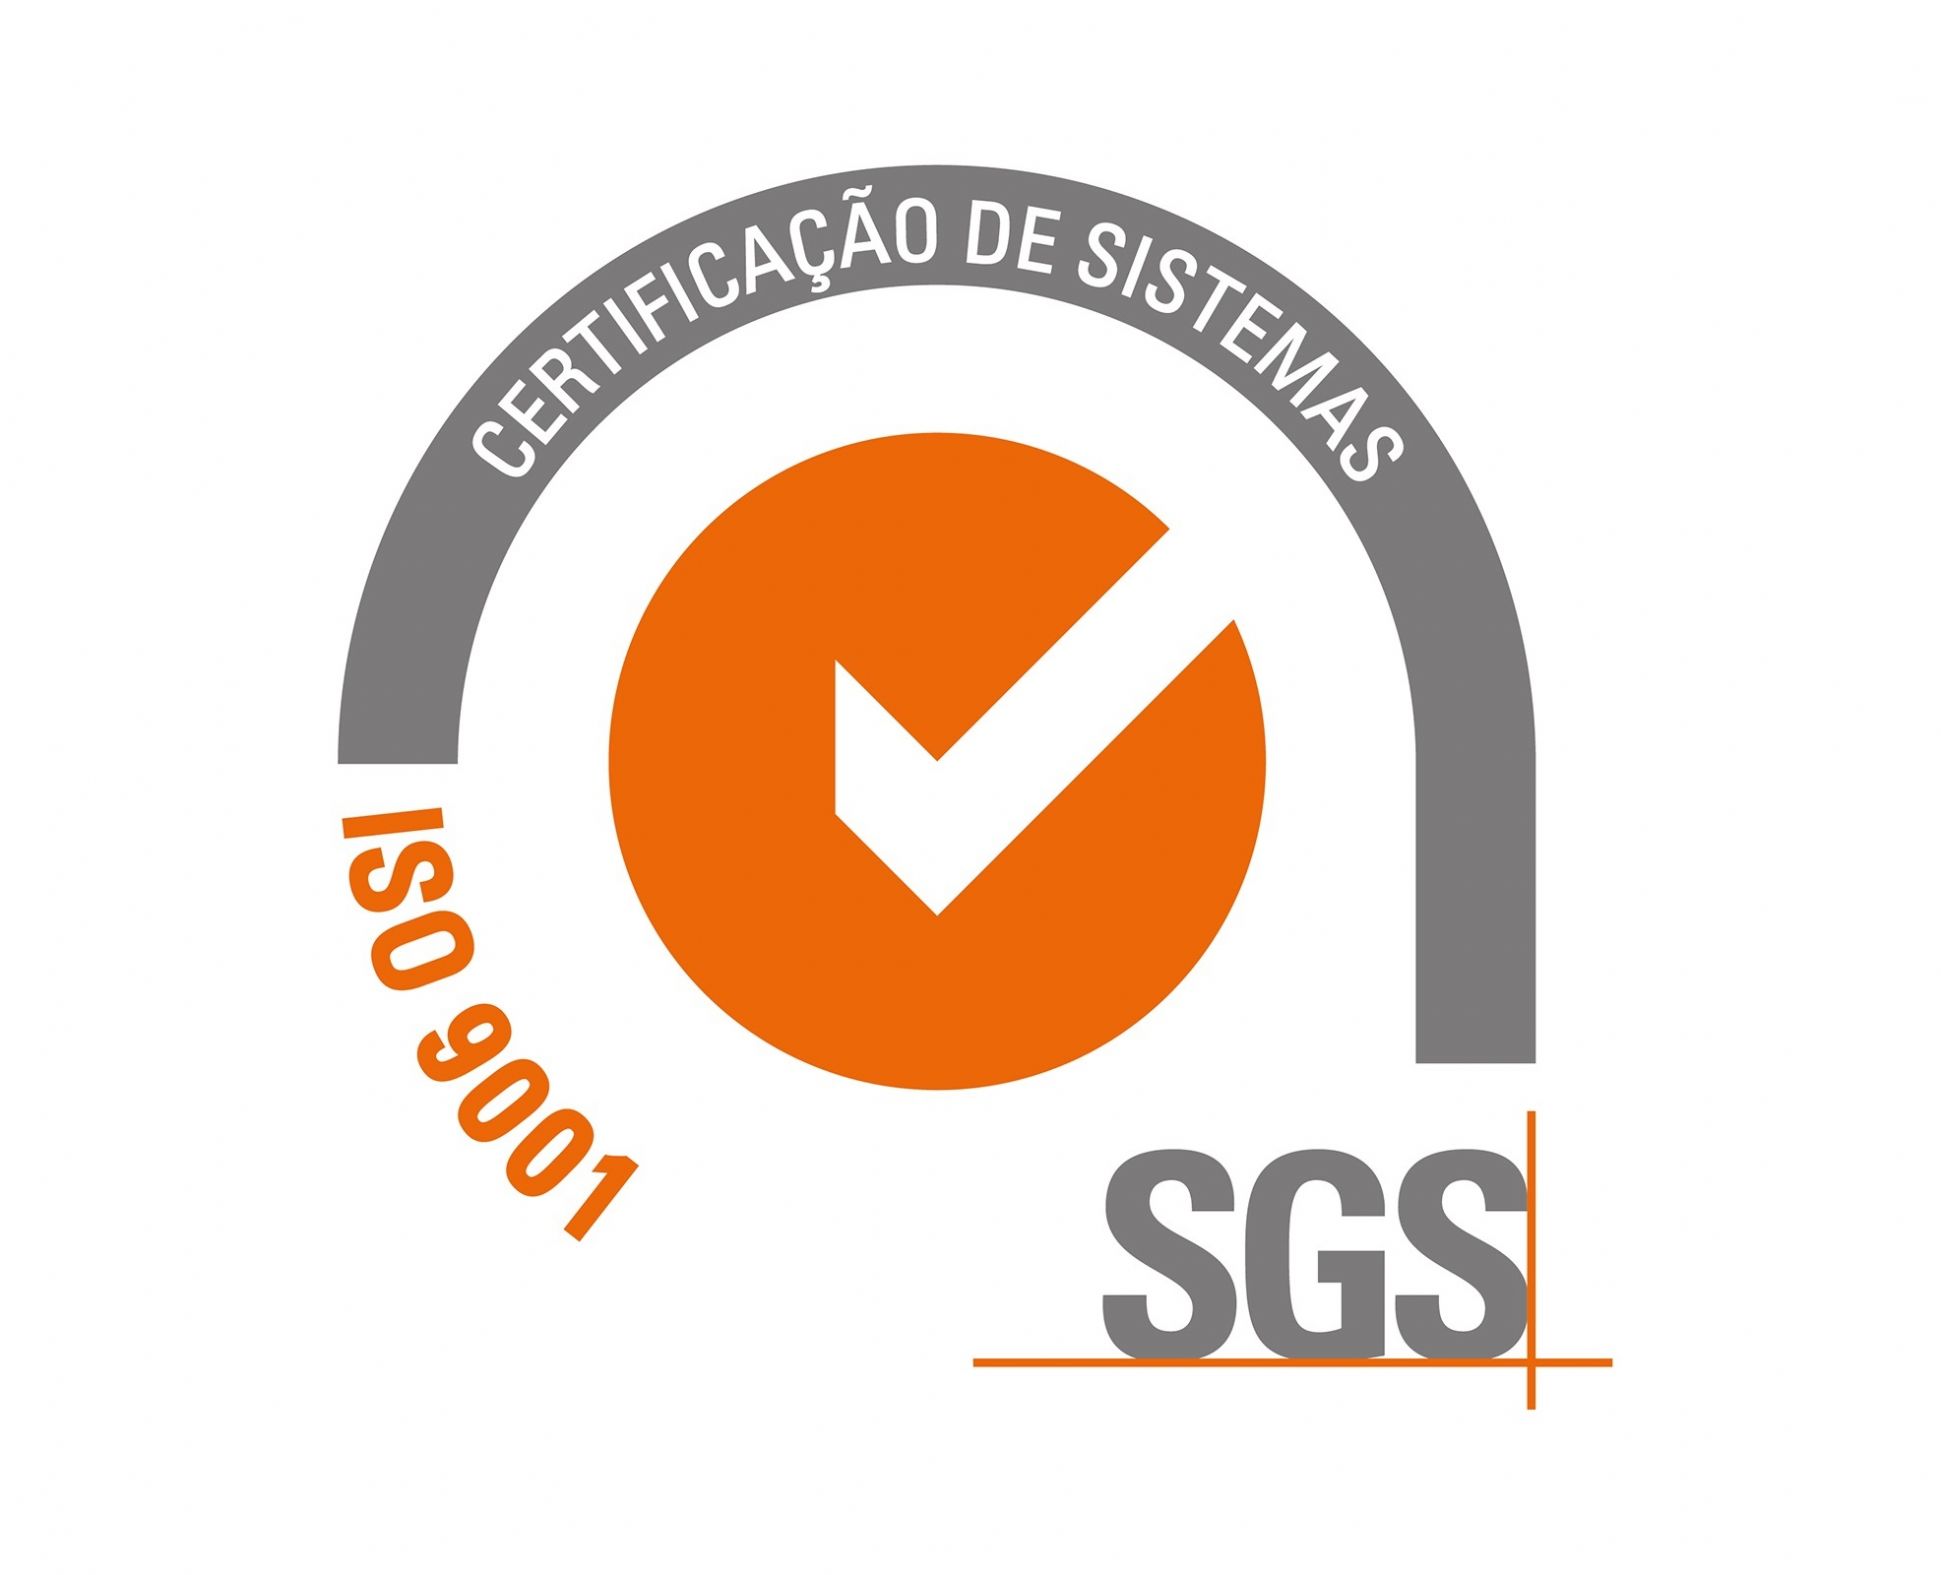 Salsamotor Certificada com a Norma de Sistema de Gestao de Qualidade ISO9001:2015